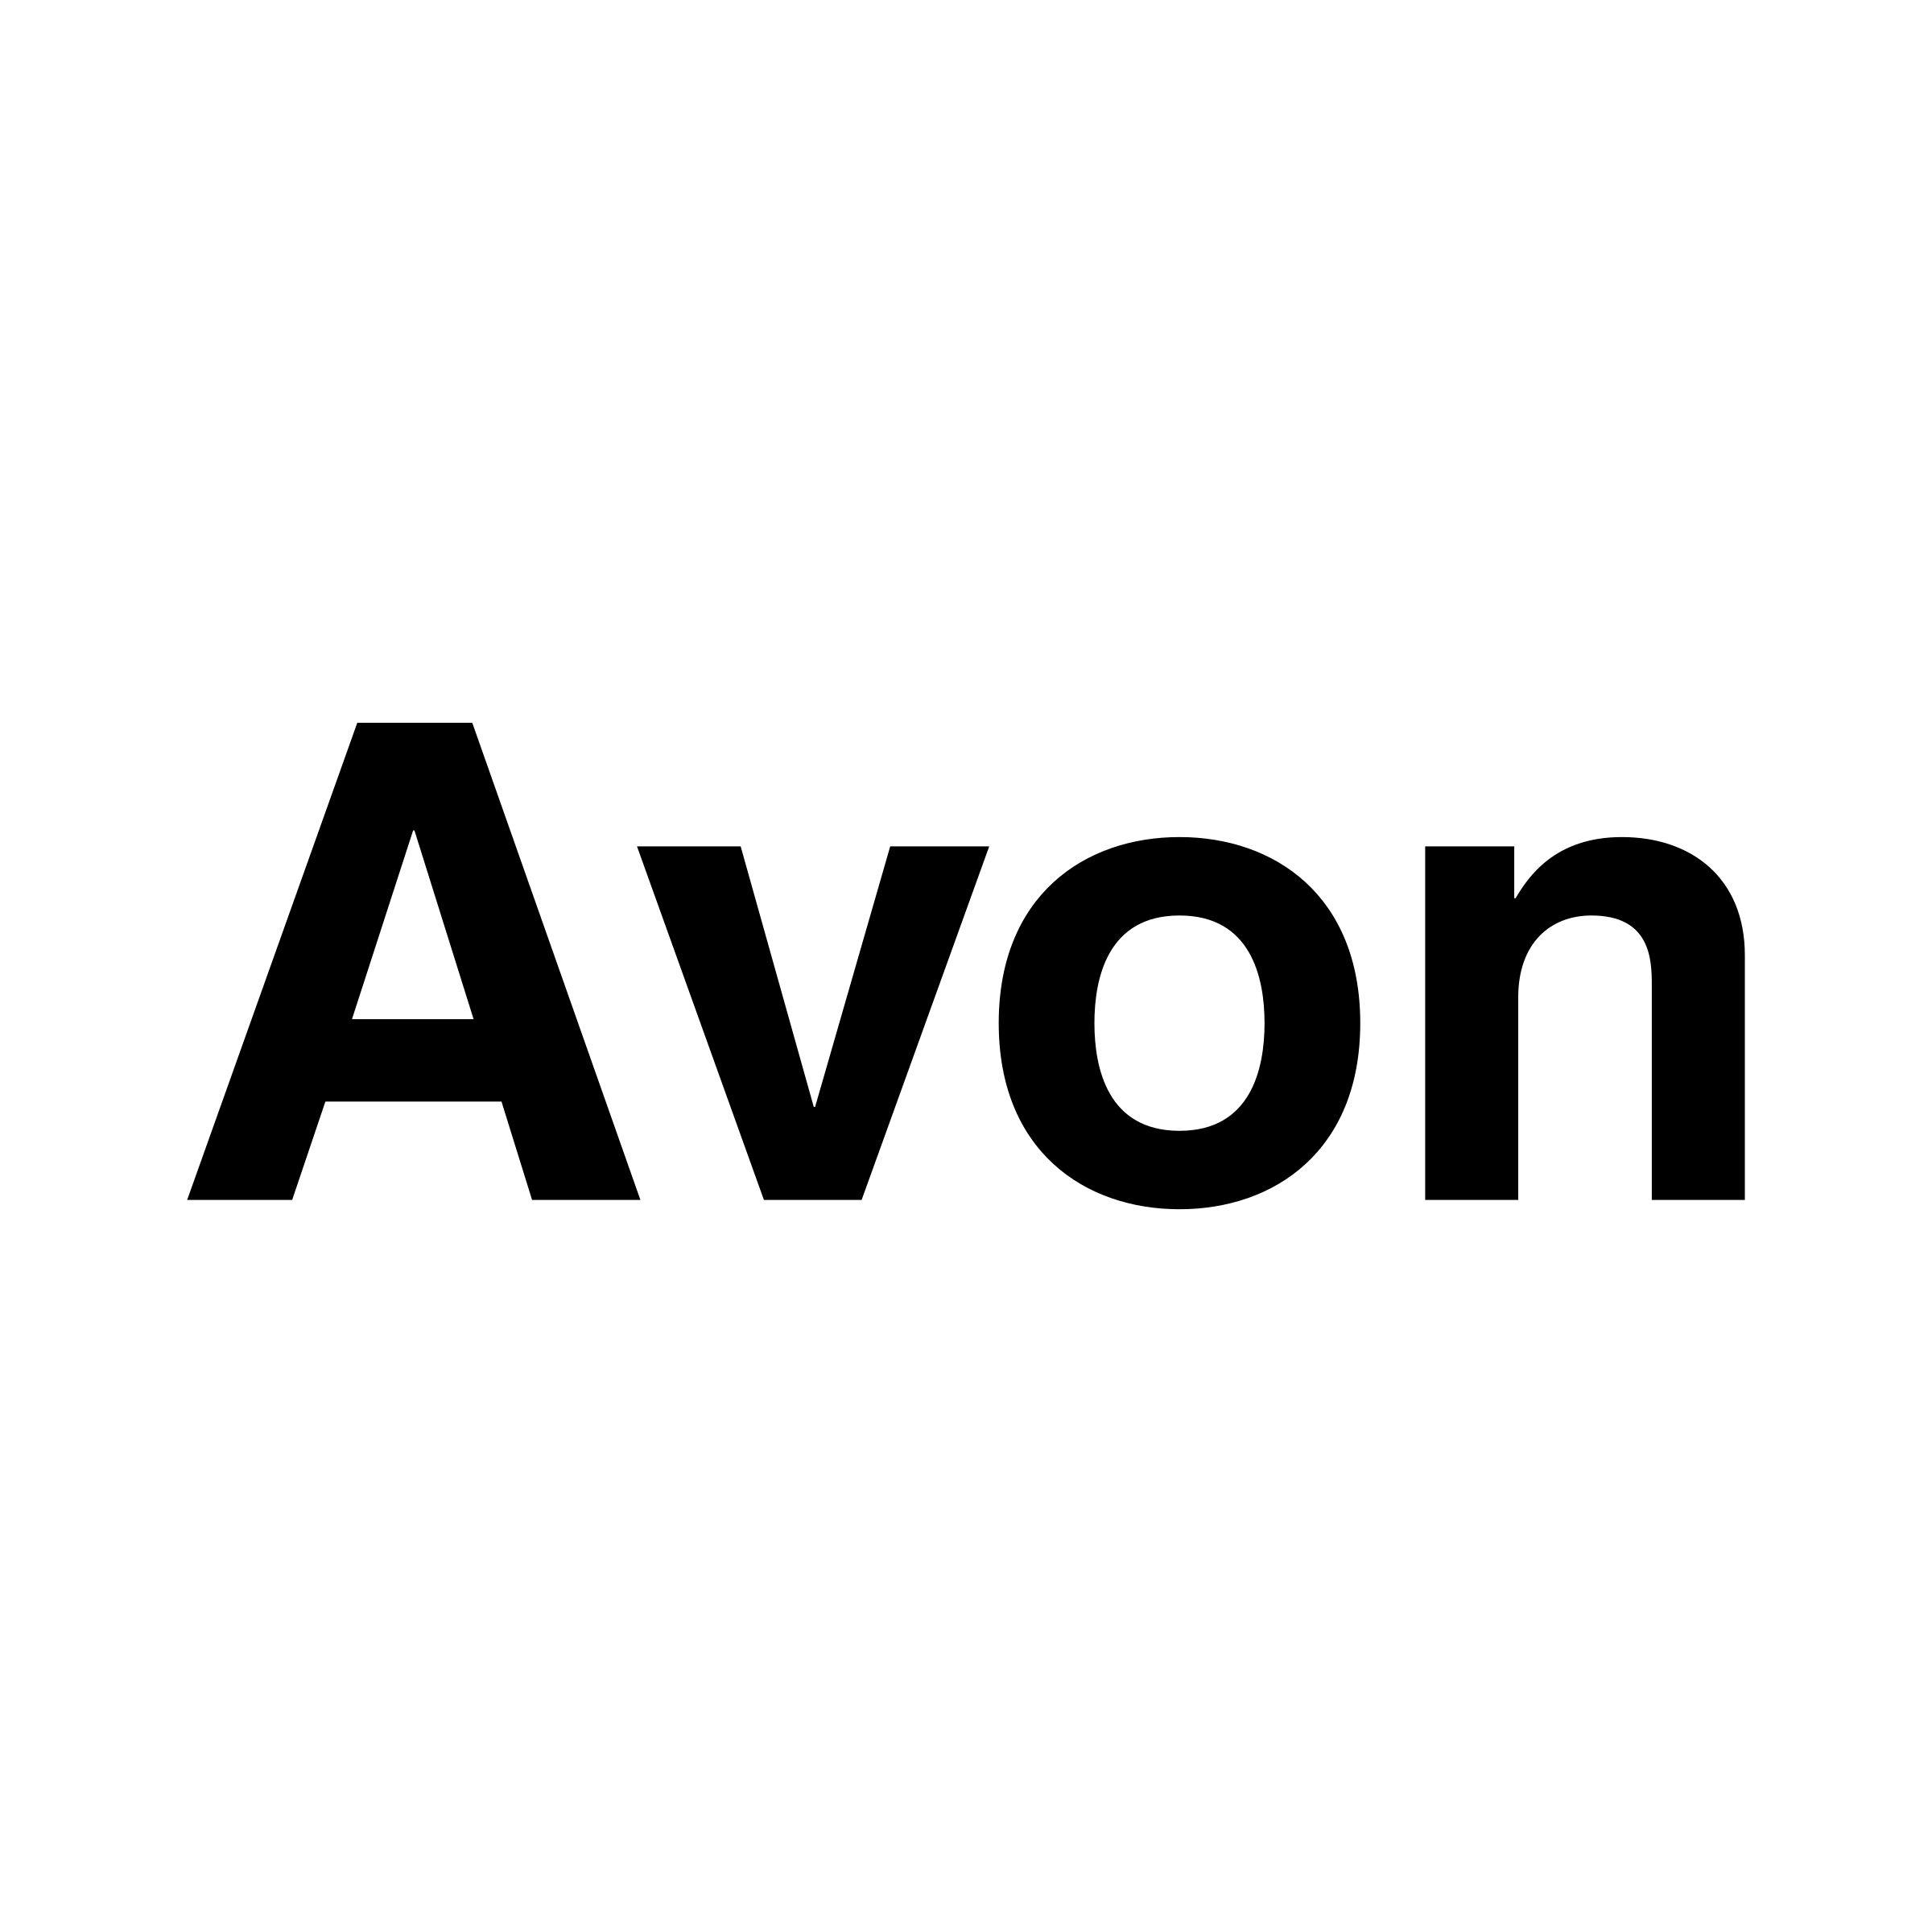 Avon Logo - Avon Logo PNG Transparent & SVG Vector